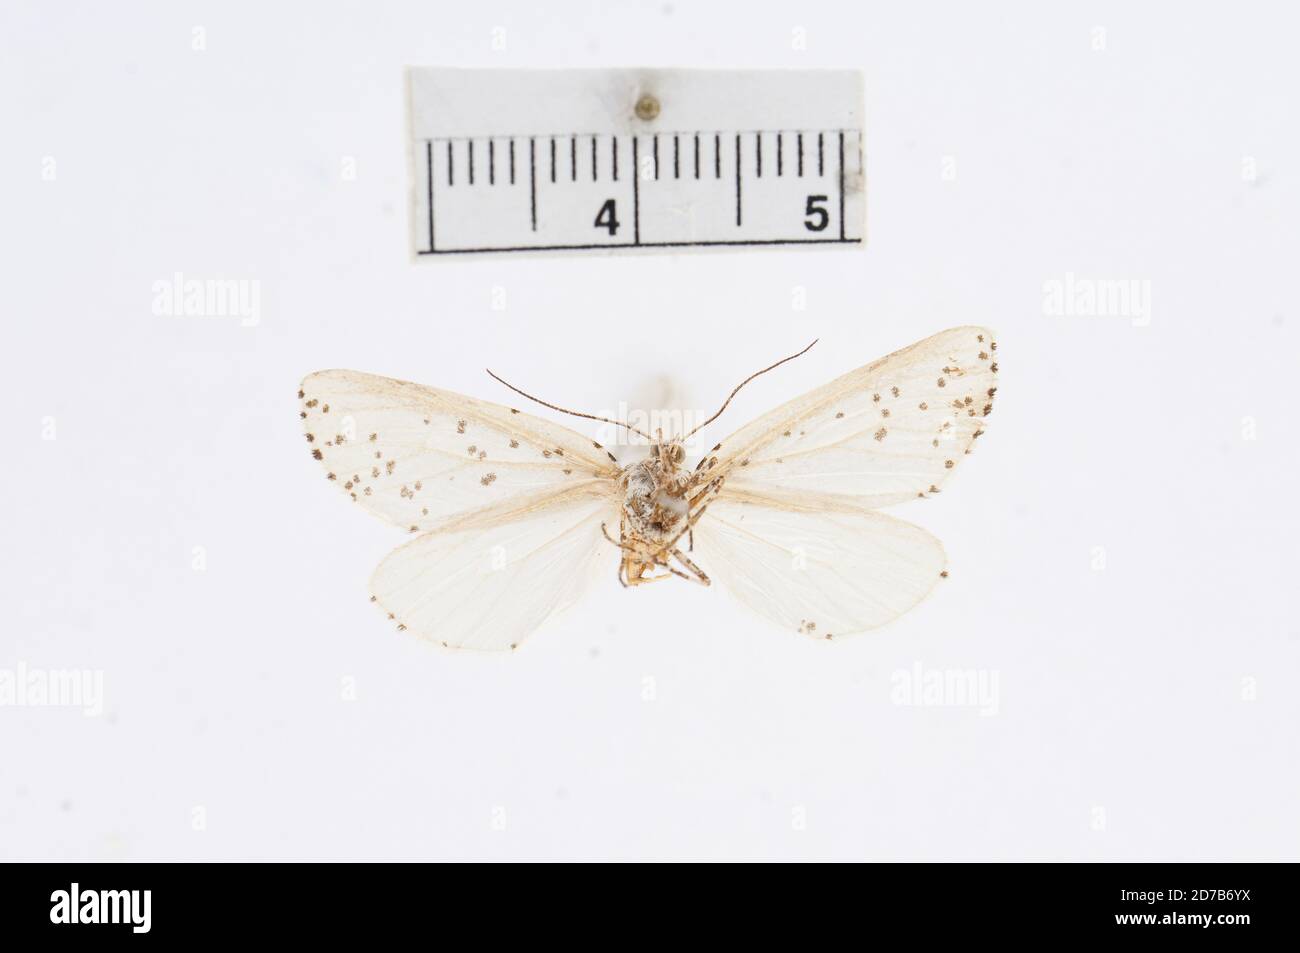 Pink, Arizona, États-Unis, Eucaterva variaria labesaria Grote, 1882, Animalia, Arthropoda, Insecta, Lepidoptera, Geometridae, Ennominae Banque D'Images